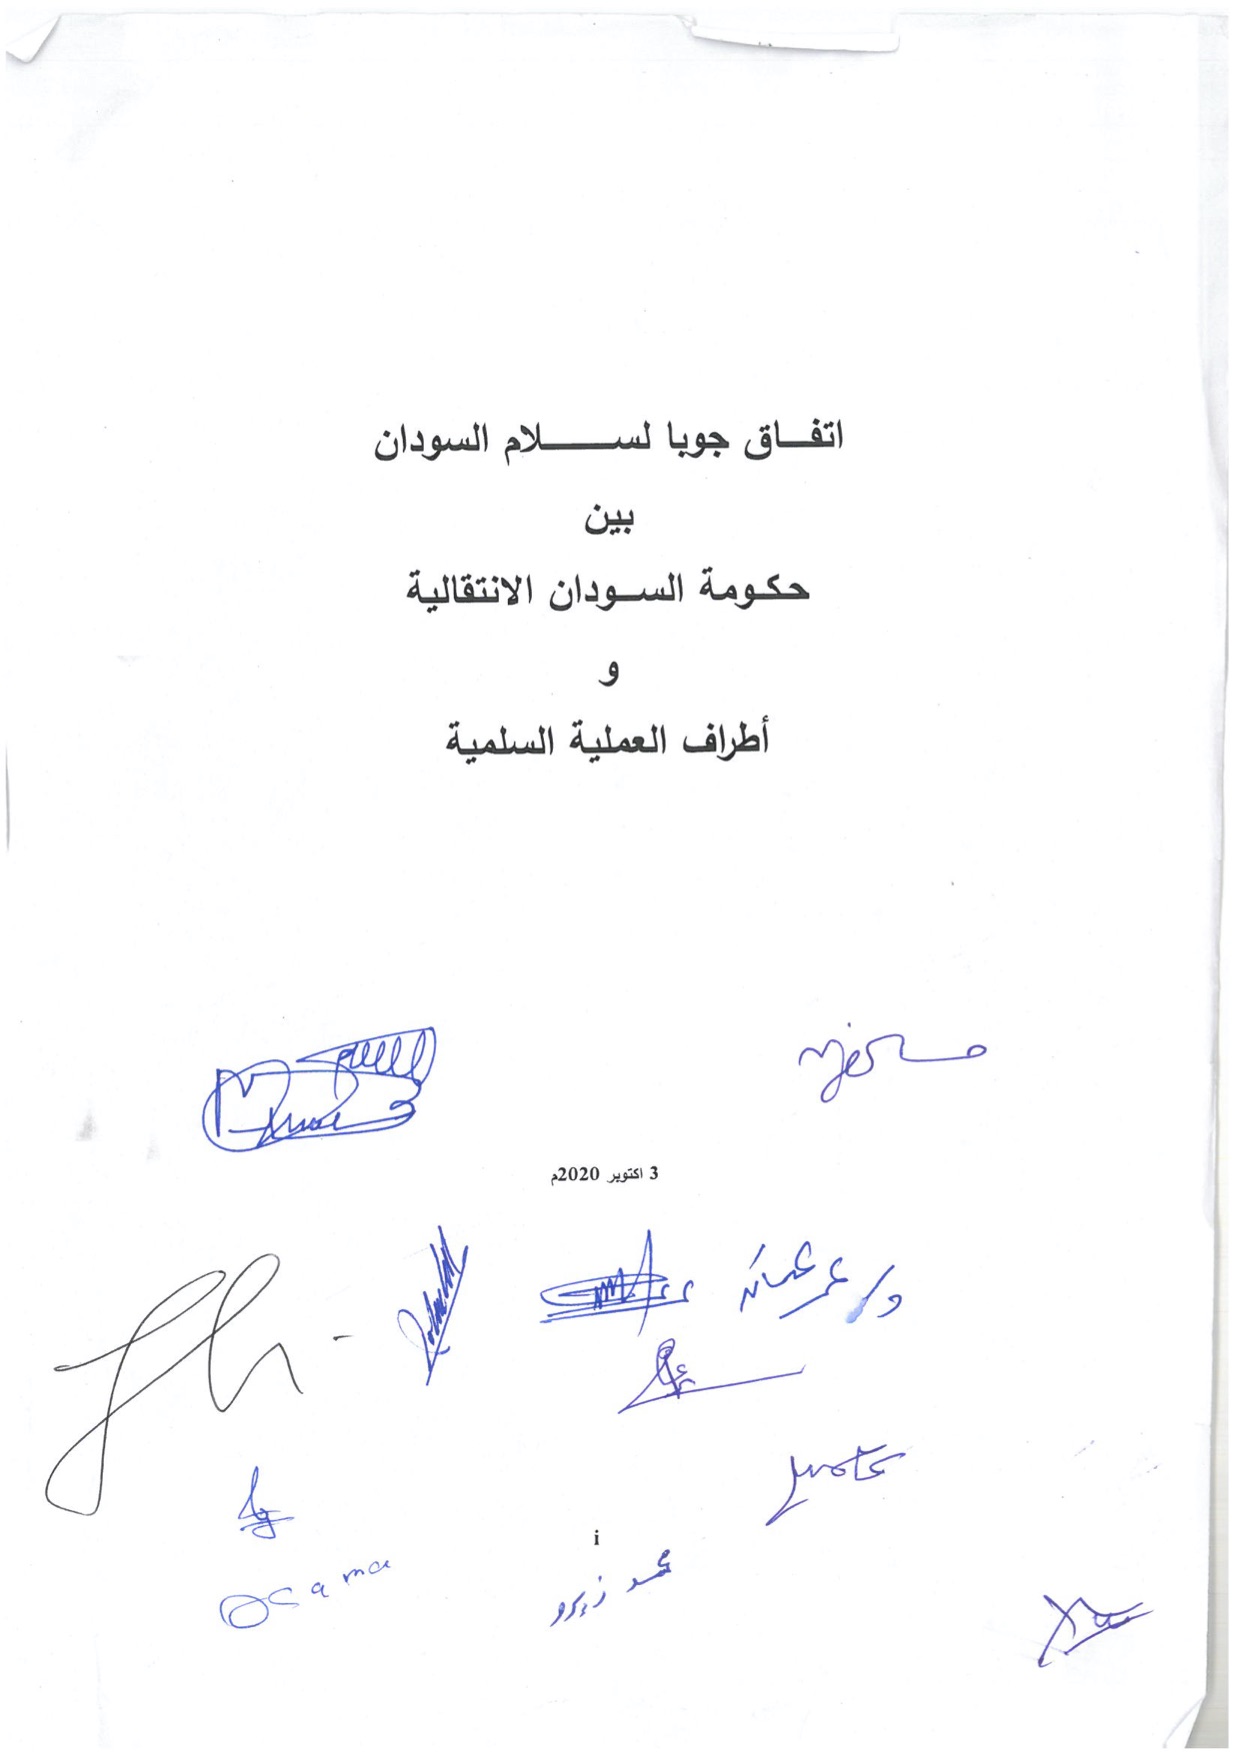 Sudan Peace Agreement